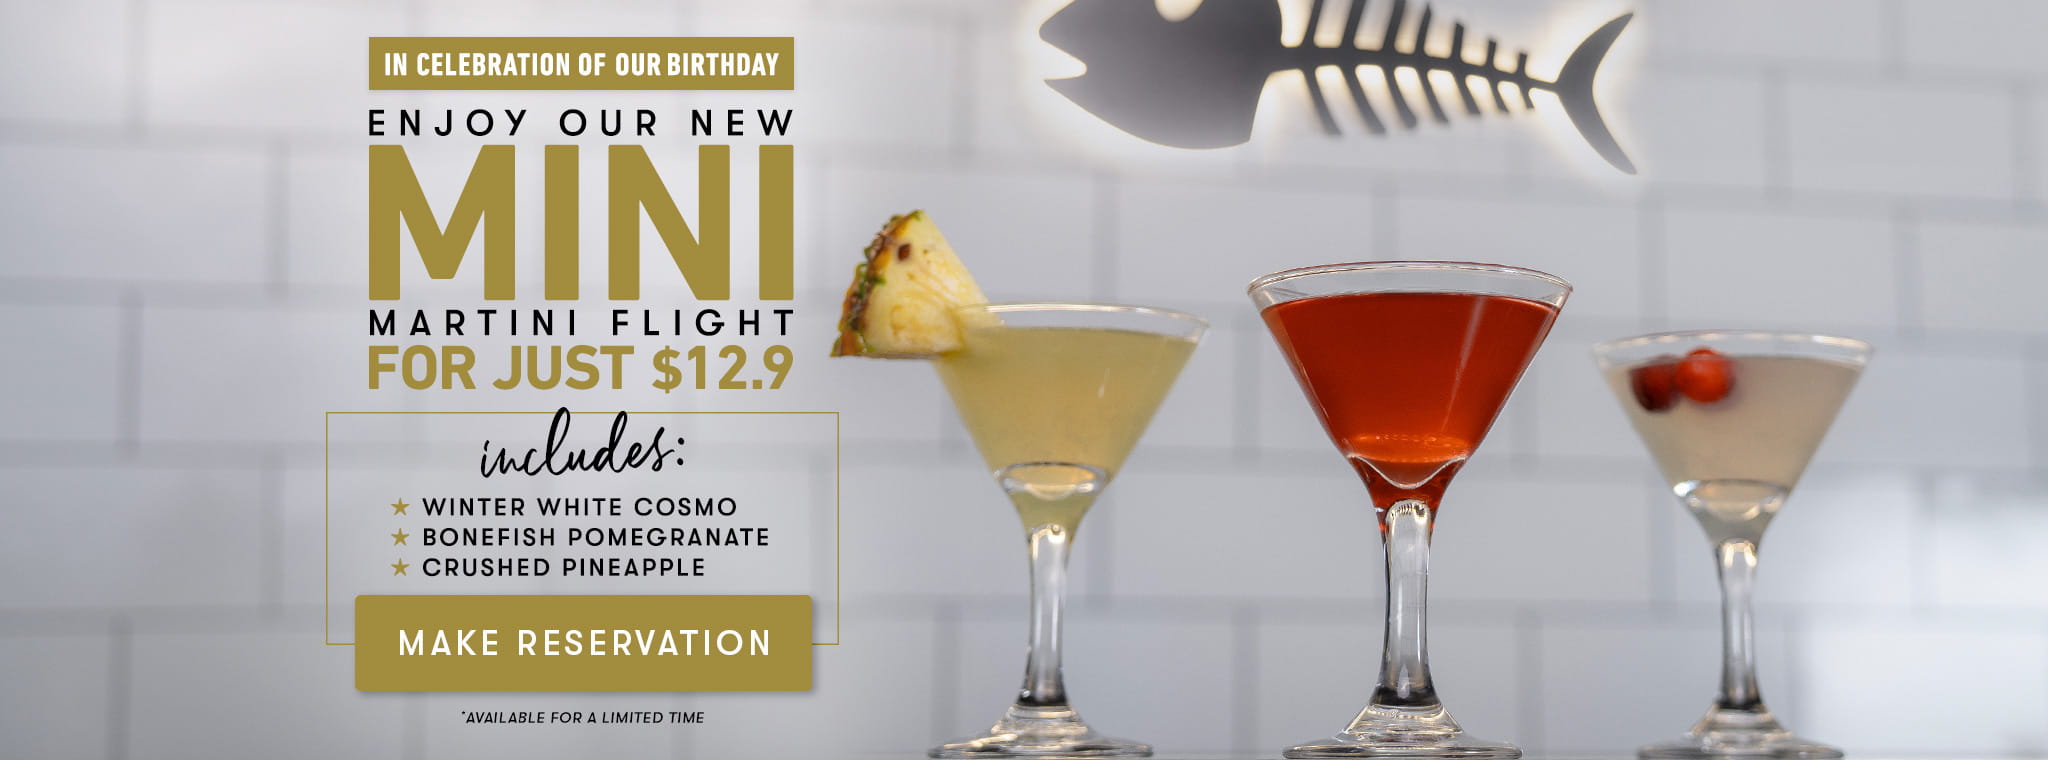 In Celebration Of Our Birthday, Enjoy Our New Mini Martini Flight 